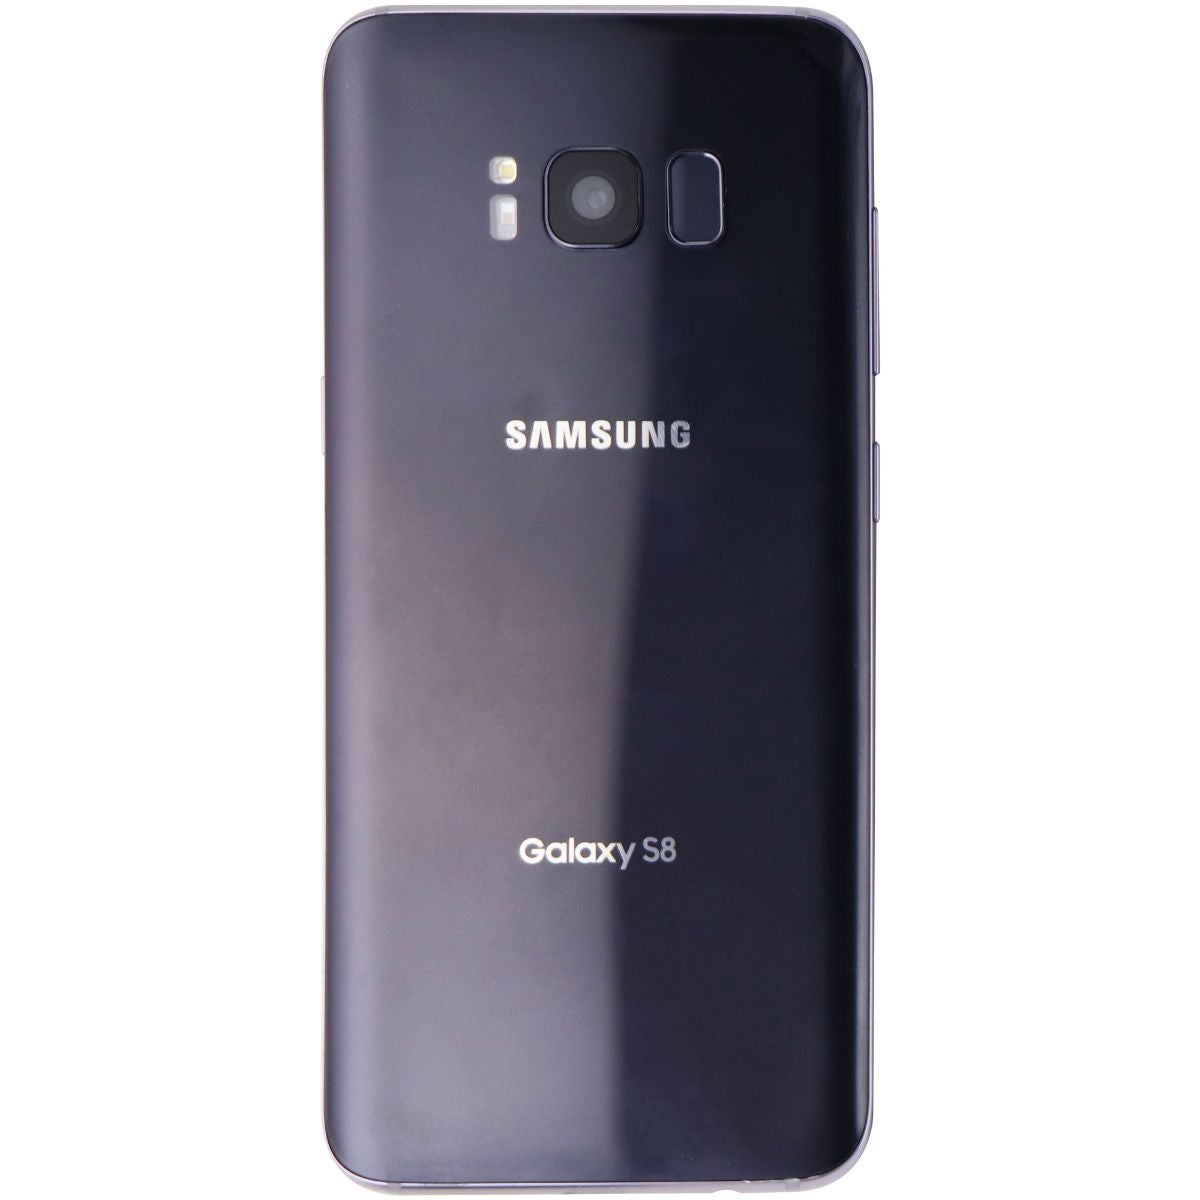 Samsung Galaxy S8 (SM-G950U1) Smartphone (GSM Unlocked + Verizon) - 64GB / Blue Cell Phones & Smartphones Samsung    - Simple Cell Bulk Wholesale Pricing - USA Seller